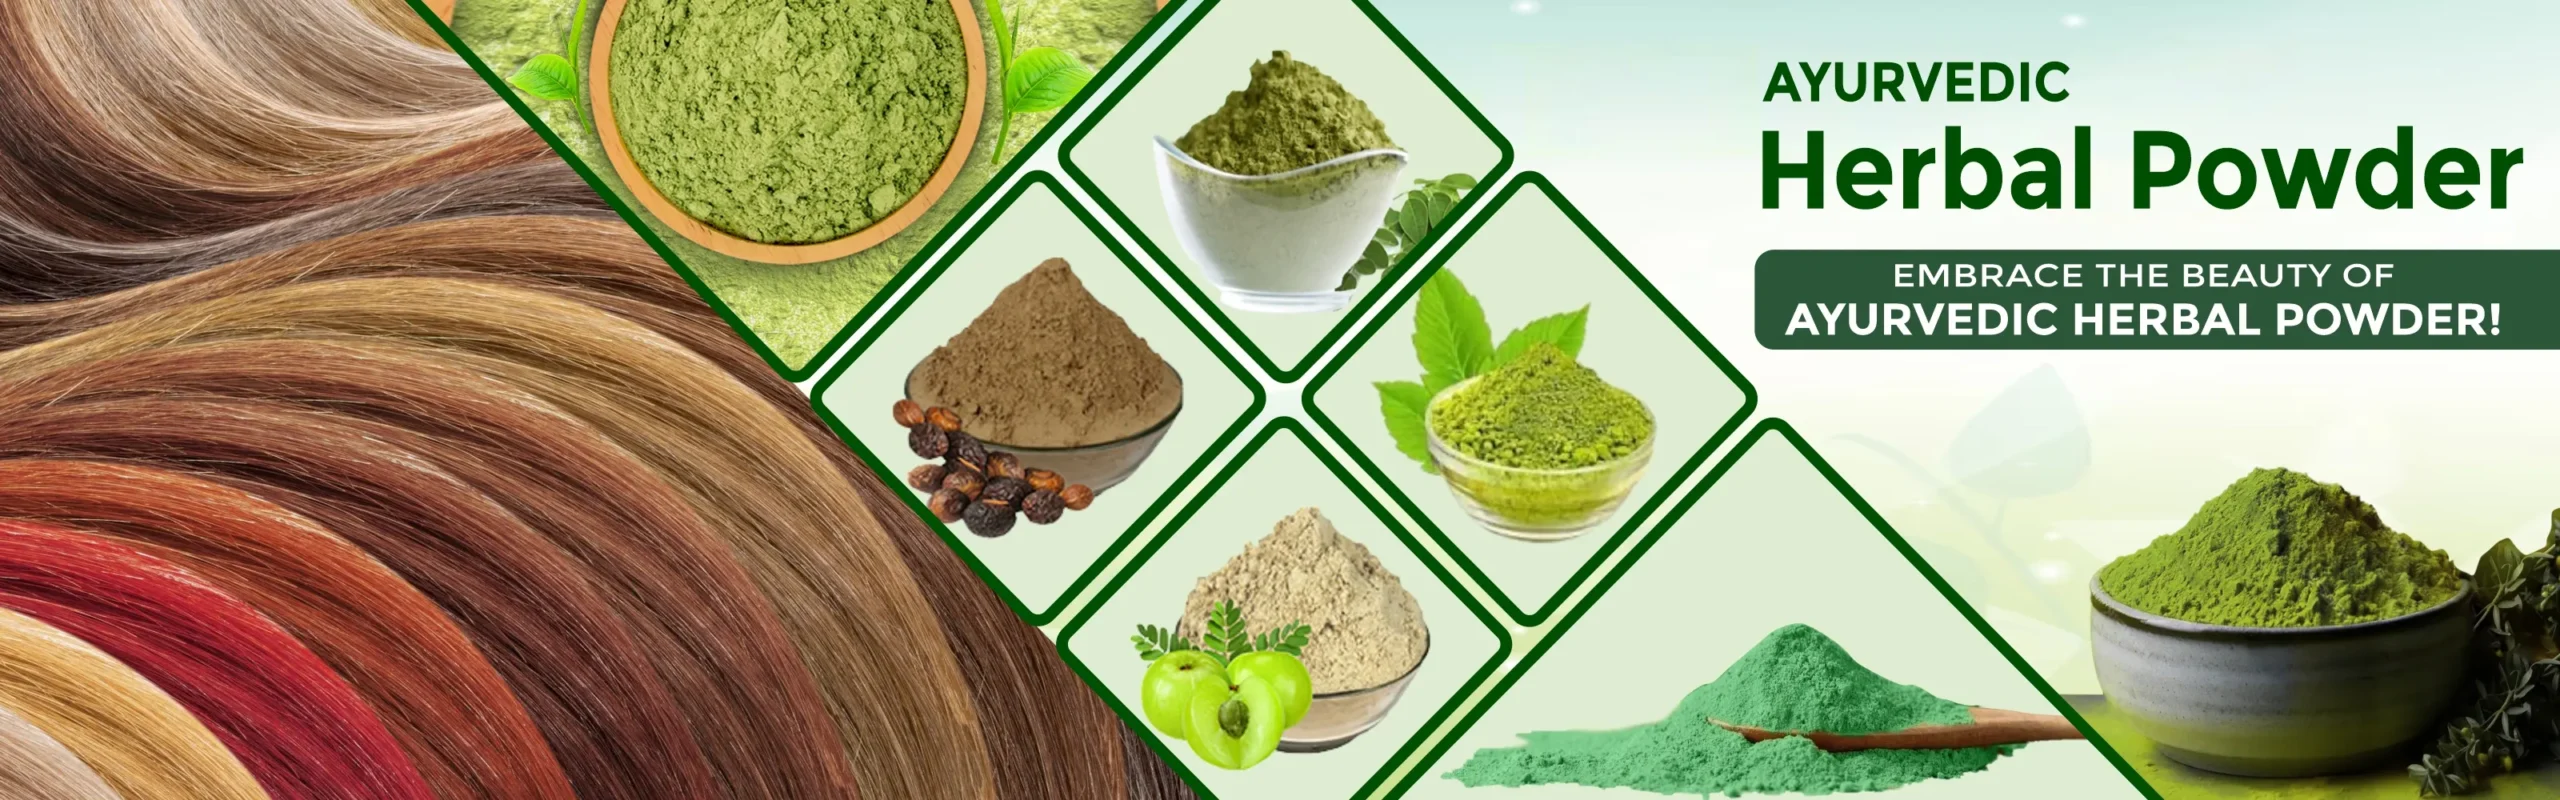 Ayurvedic Herbal Powder banner - www.dkihenna.com